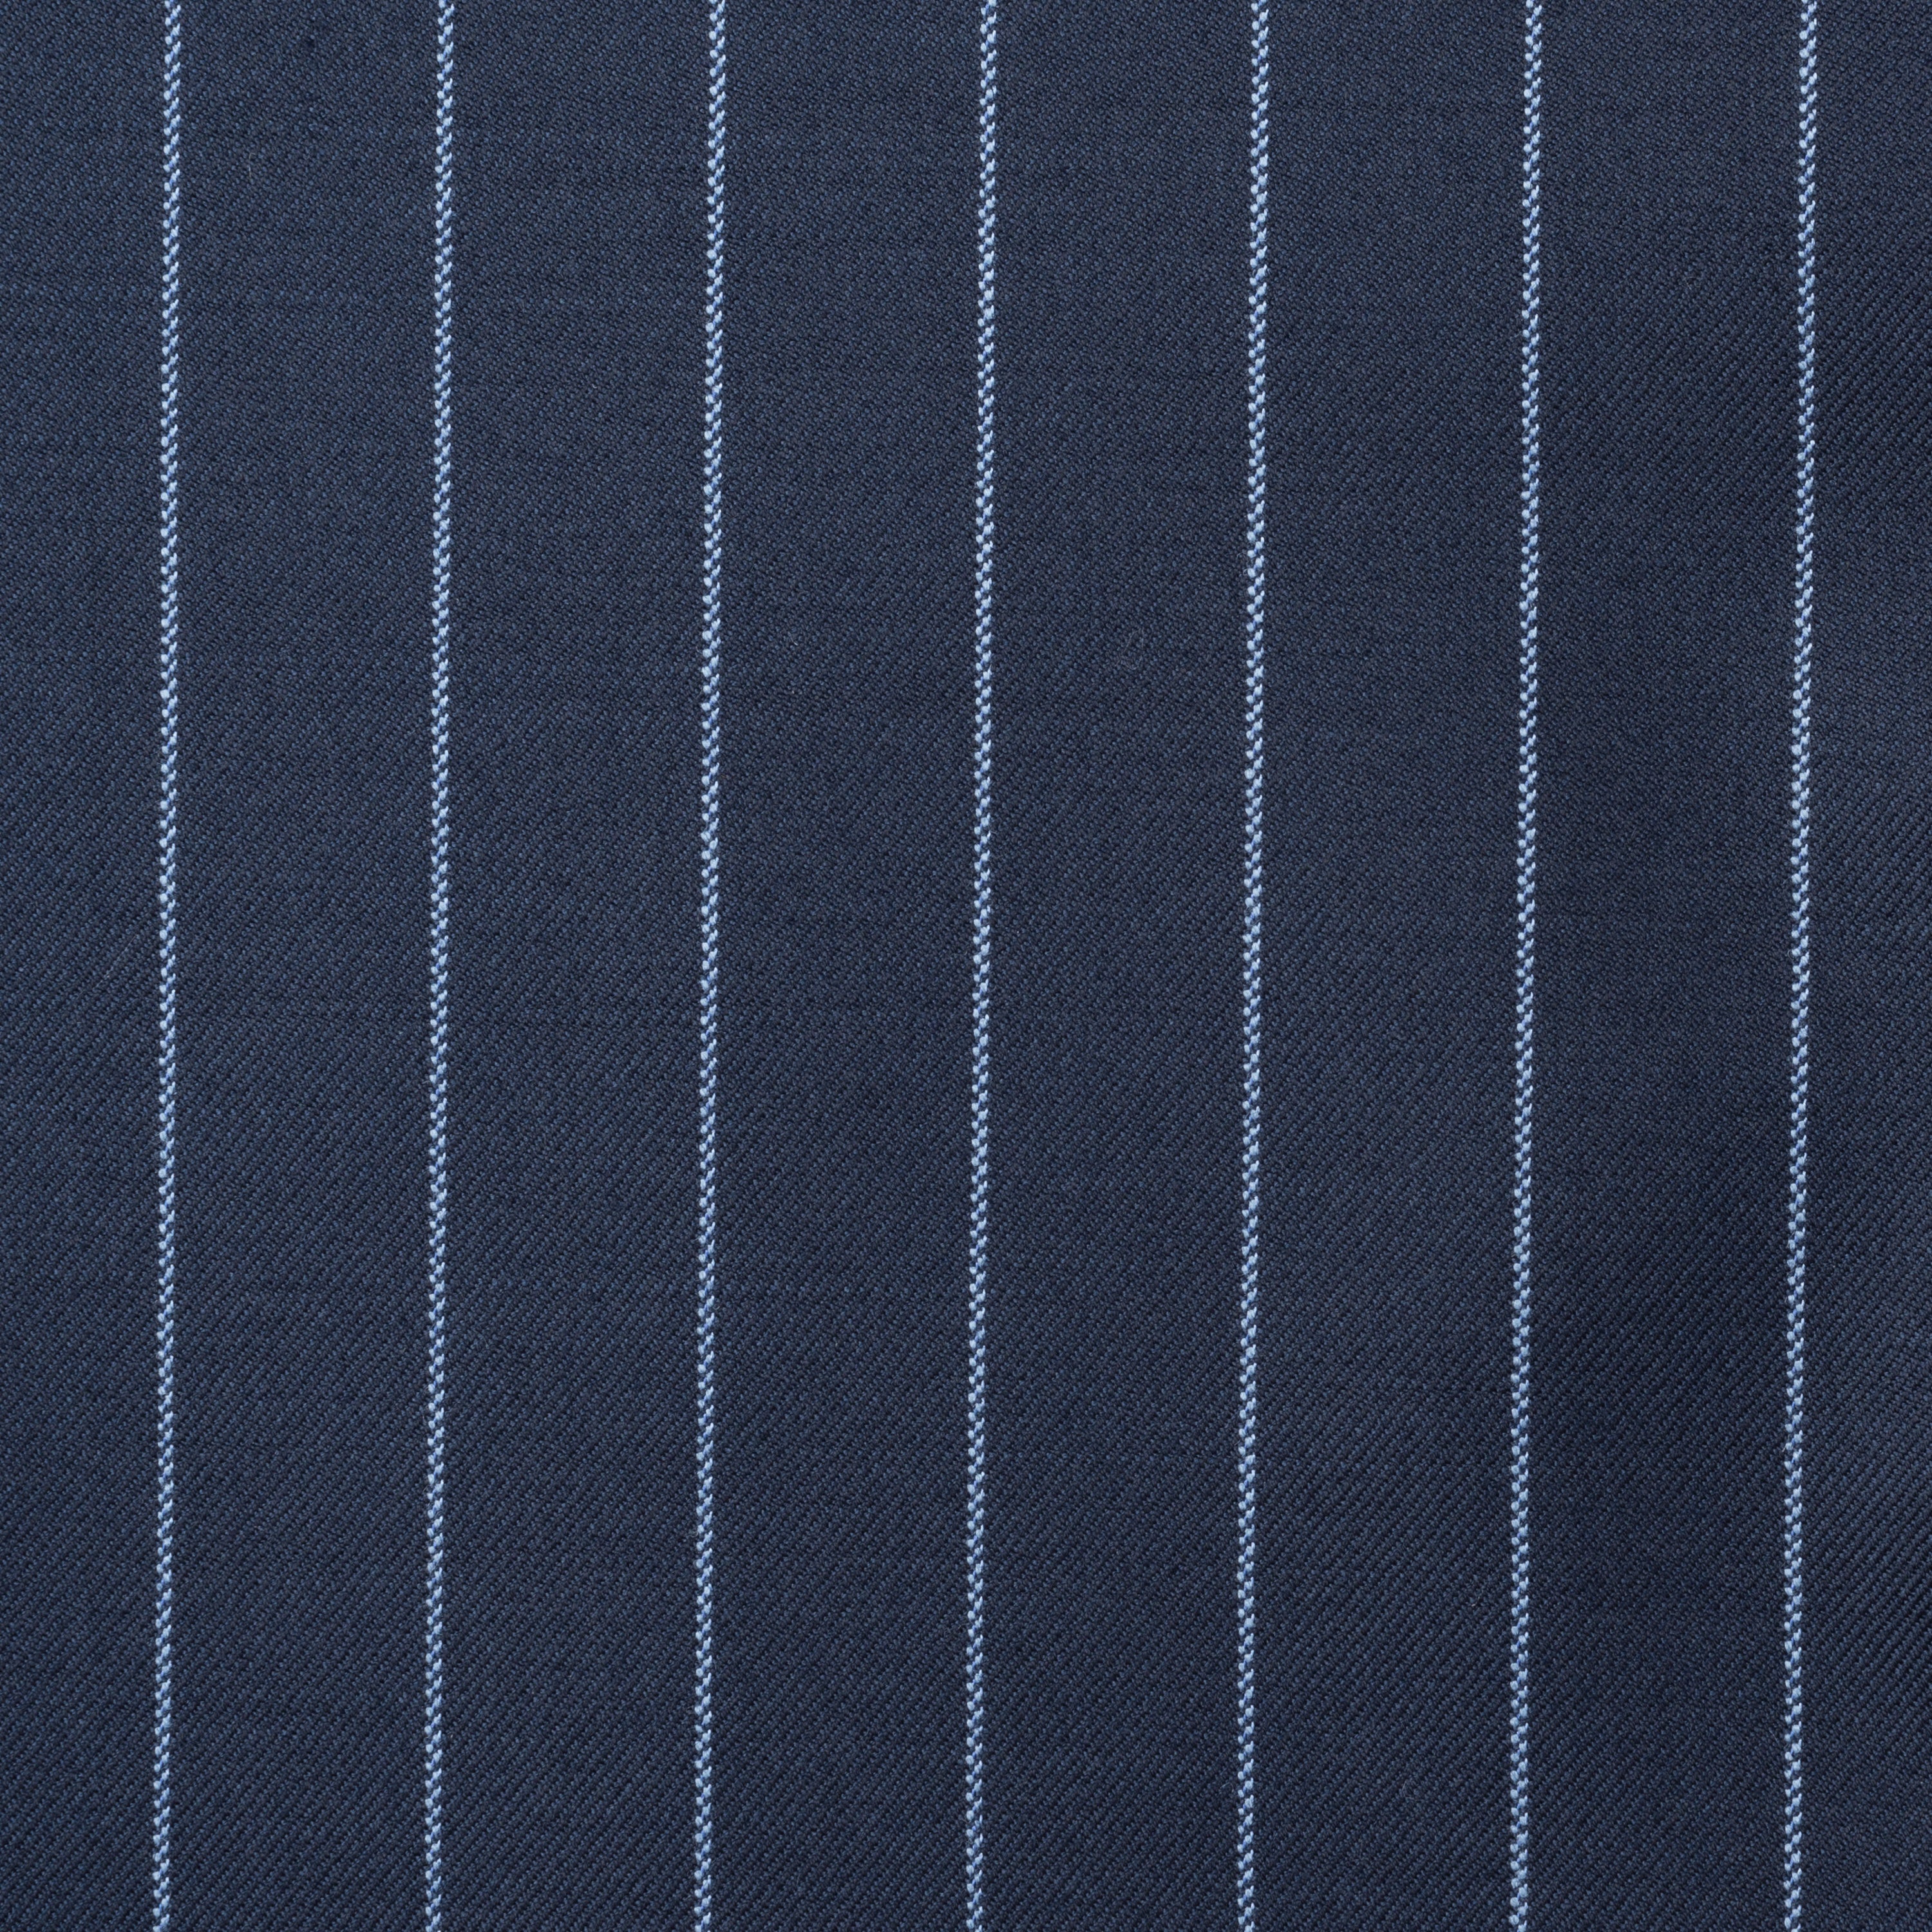 SARTORIA CASTANGIA Navy Blue Striped Wool Super 140's Jacket EU 54 NEW US 44 CASTANGIA